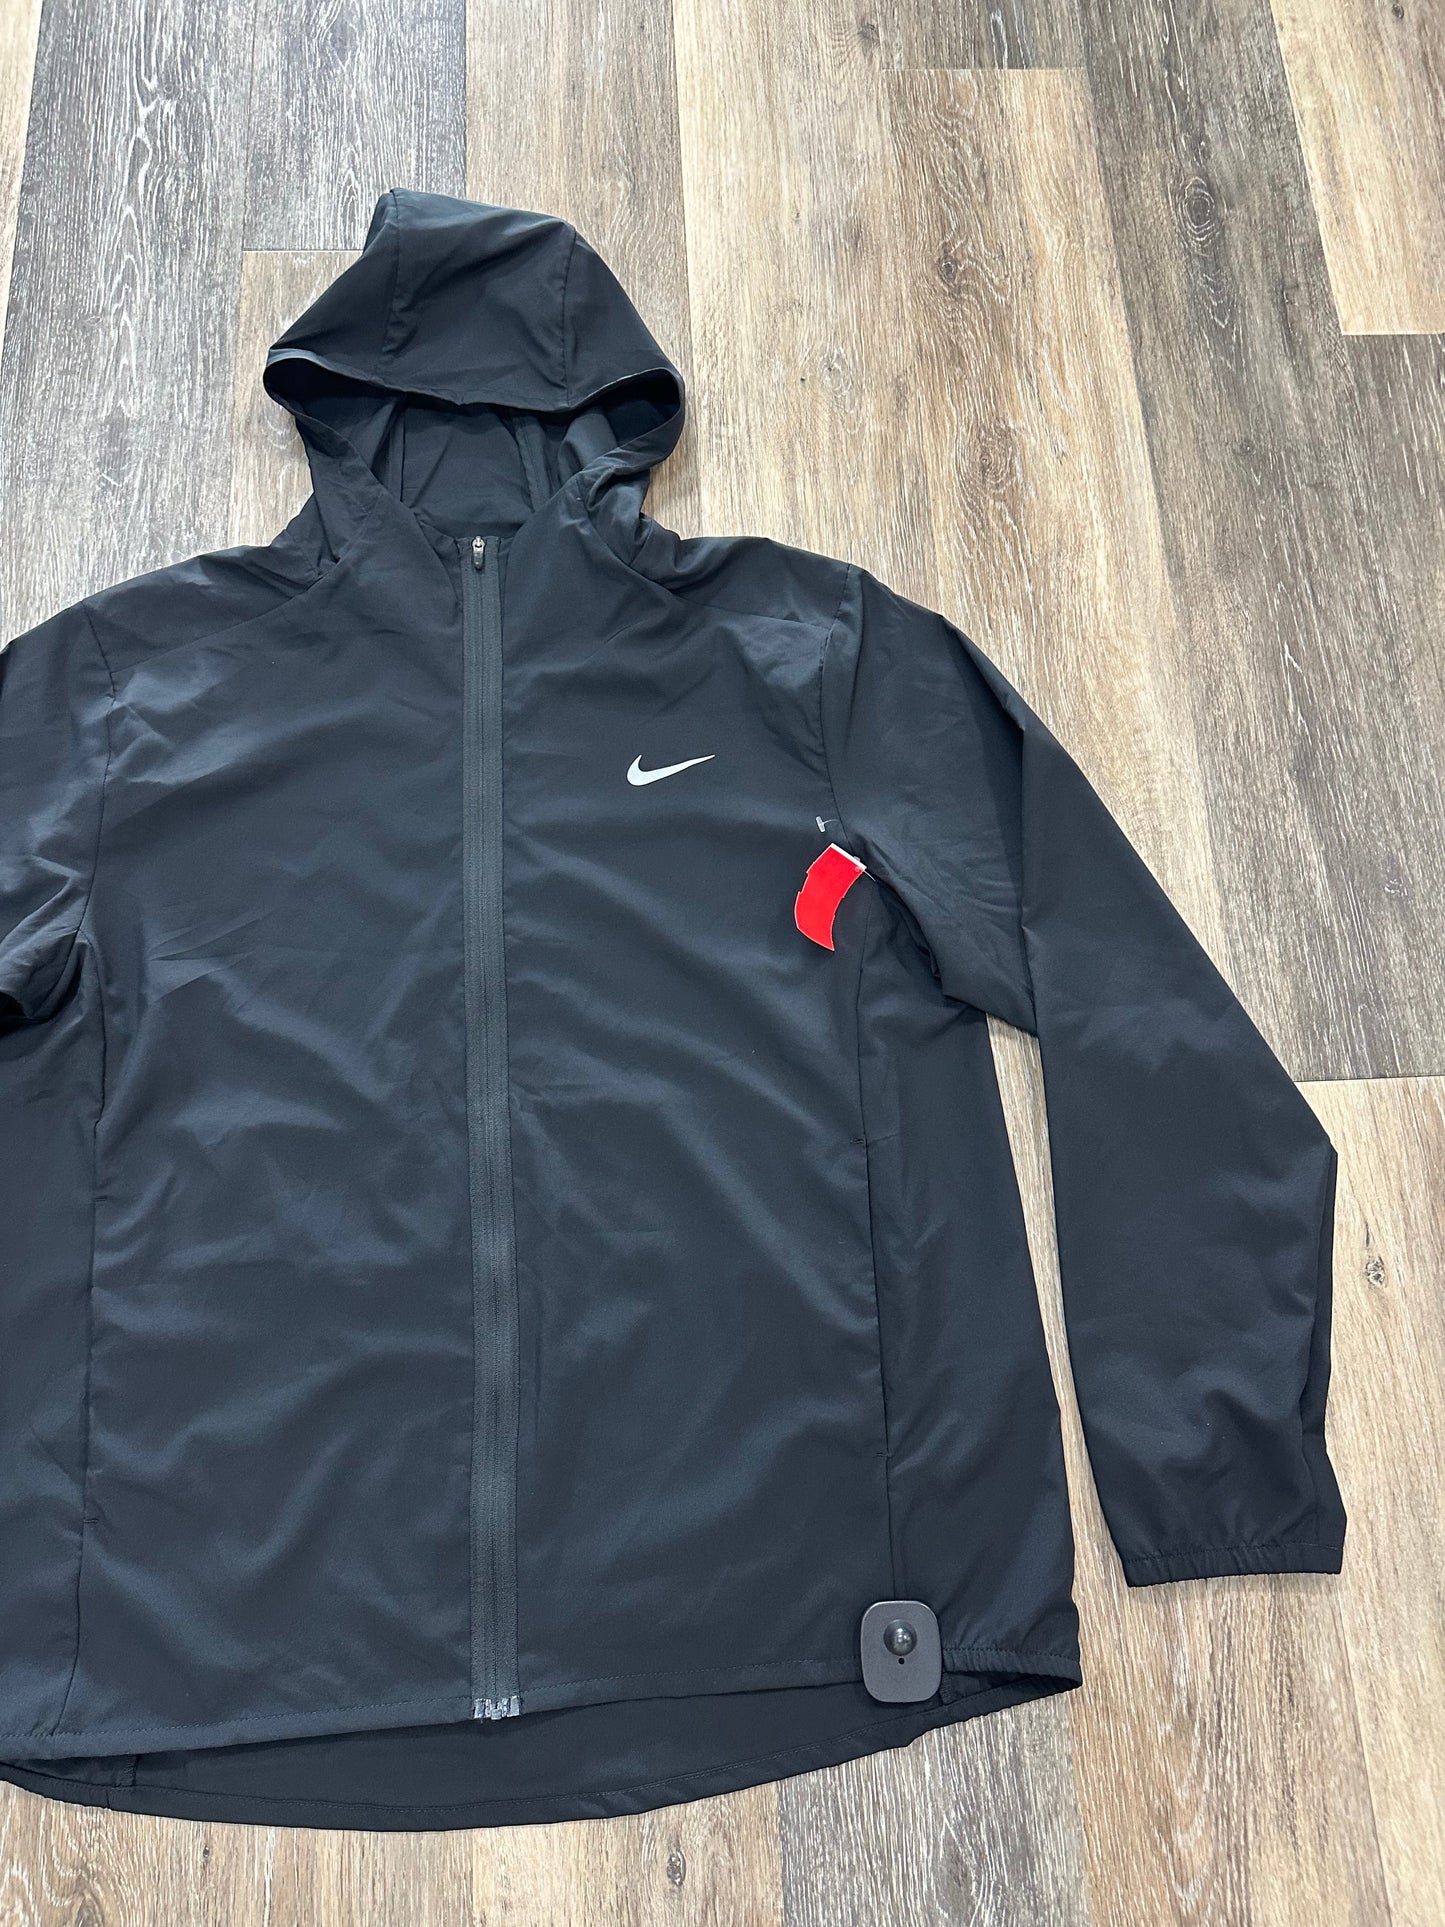 Black Athletic Jacket Nike Apparel, Size L